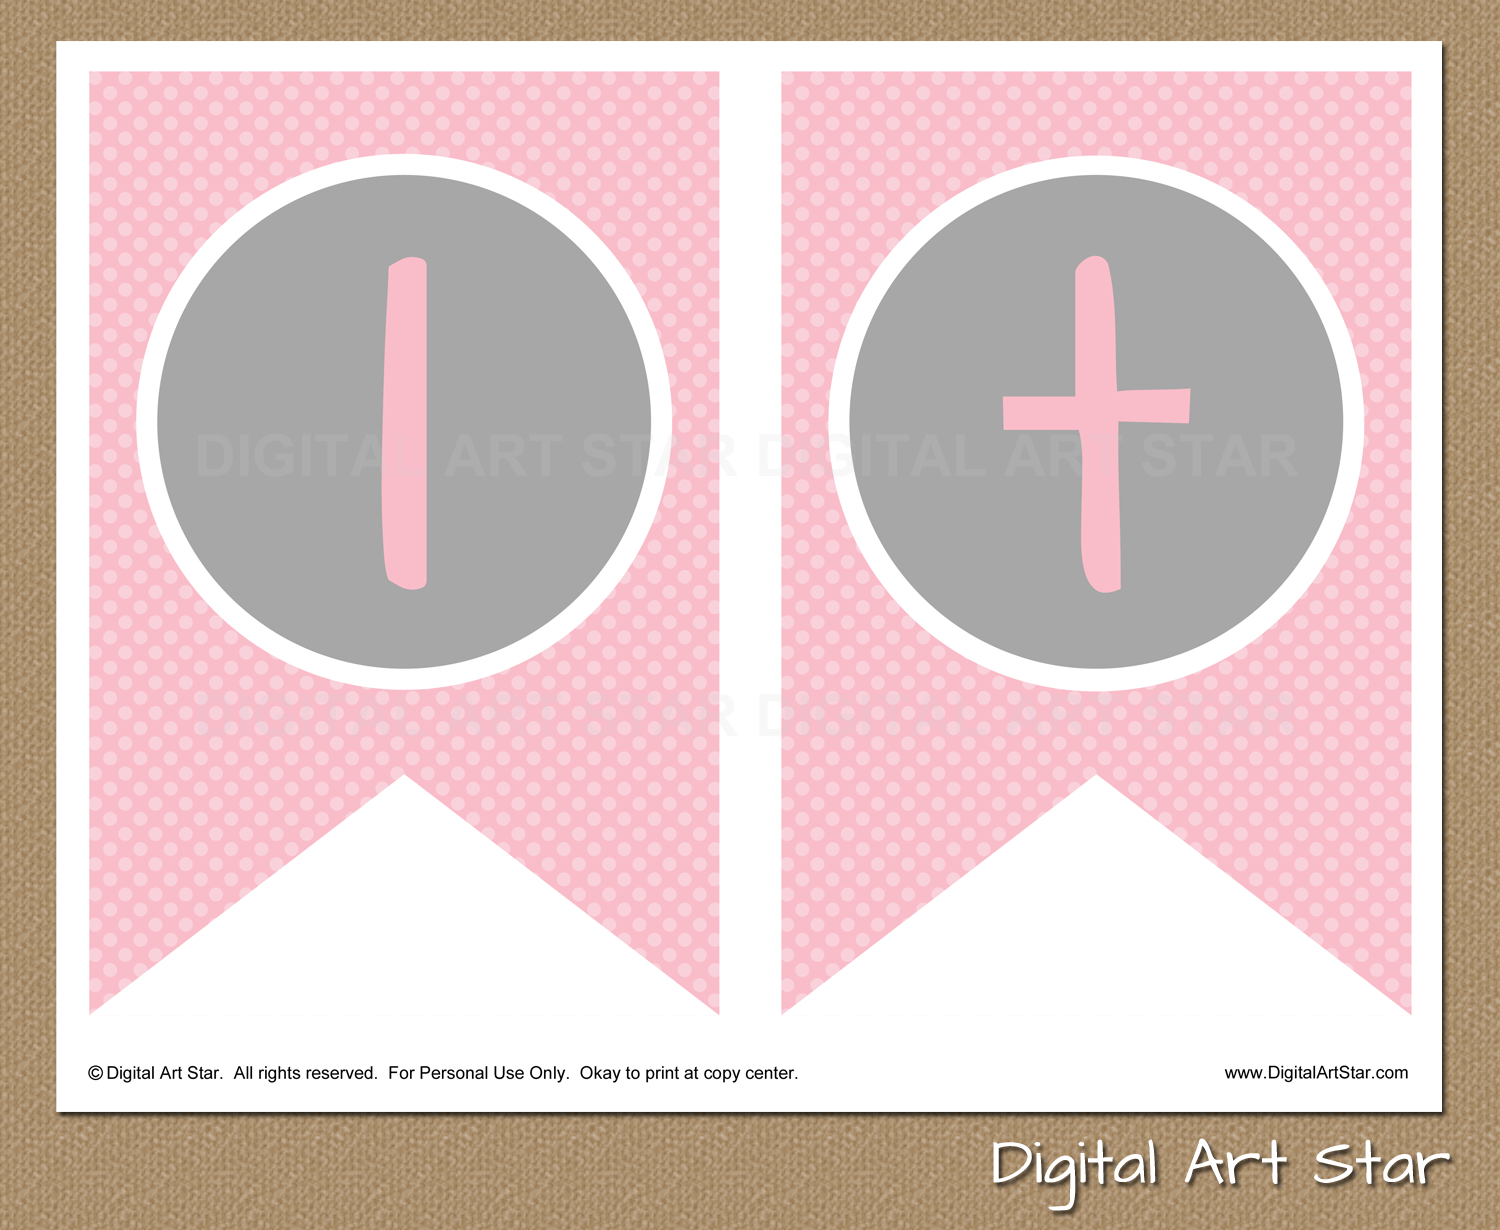 Digital Art Star: Printable Party Decor: Diy Printable It's Regarding Diy Baby Shower Banner Template